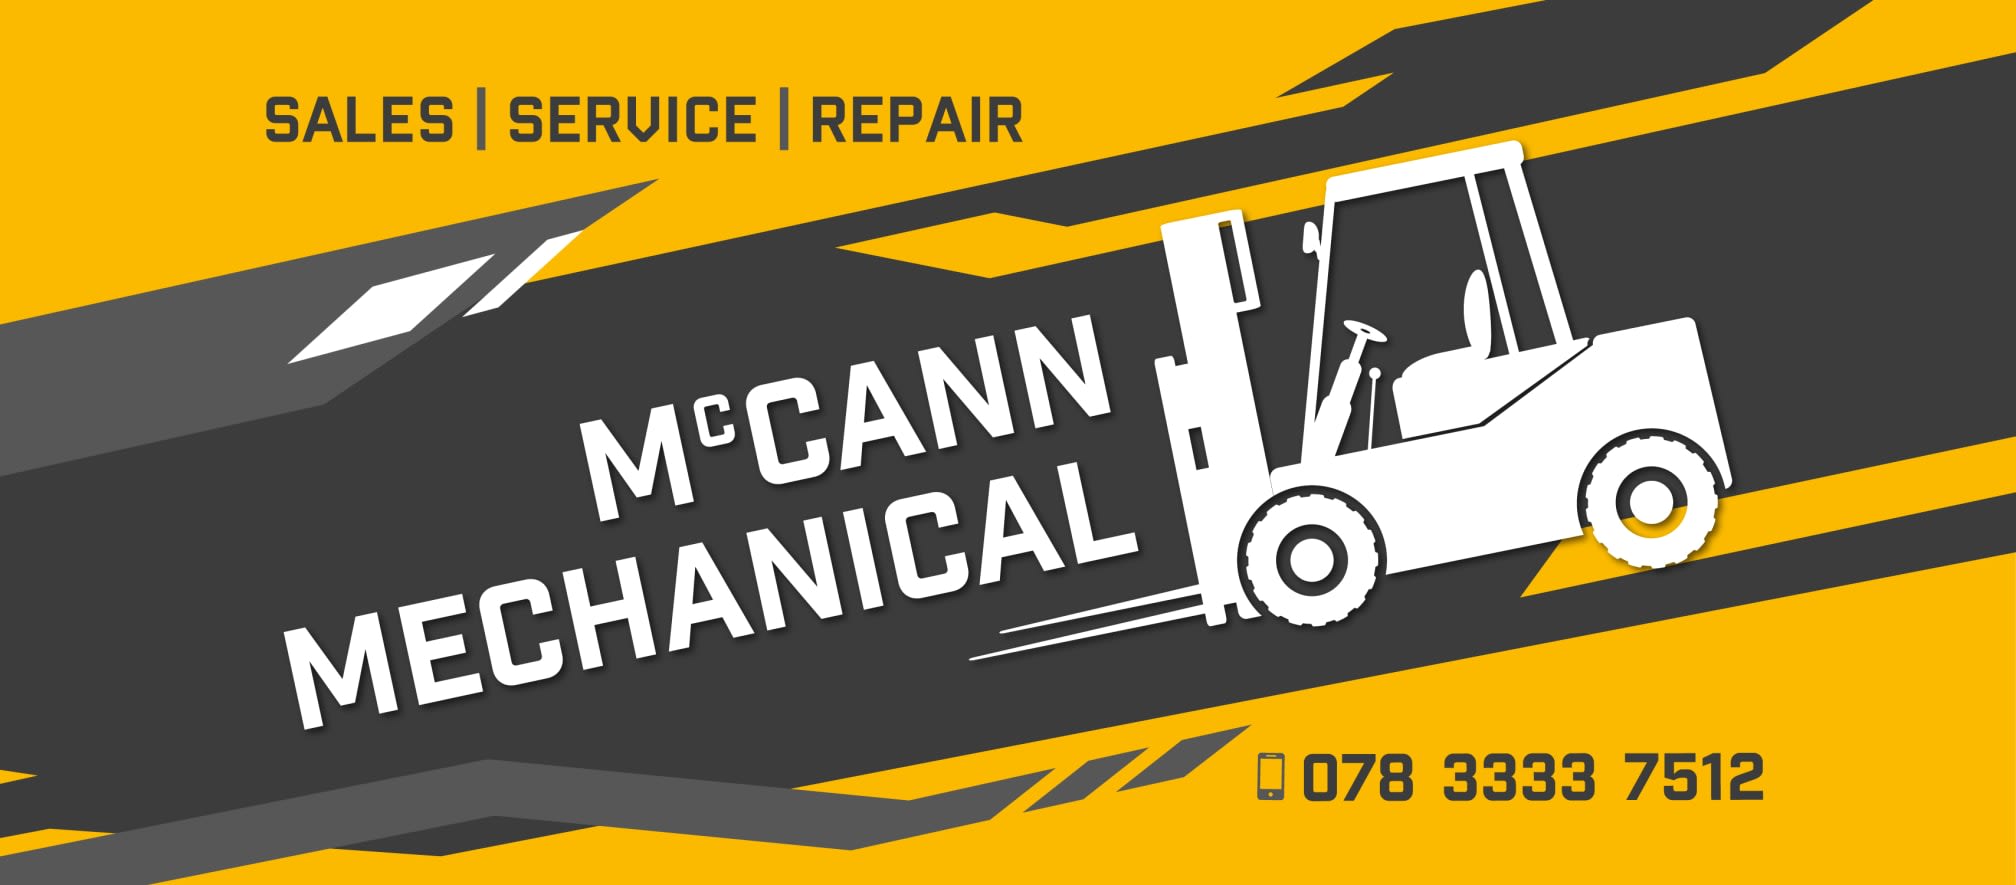 McCann Mechanical Antrim 07833 337512